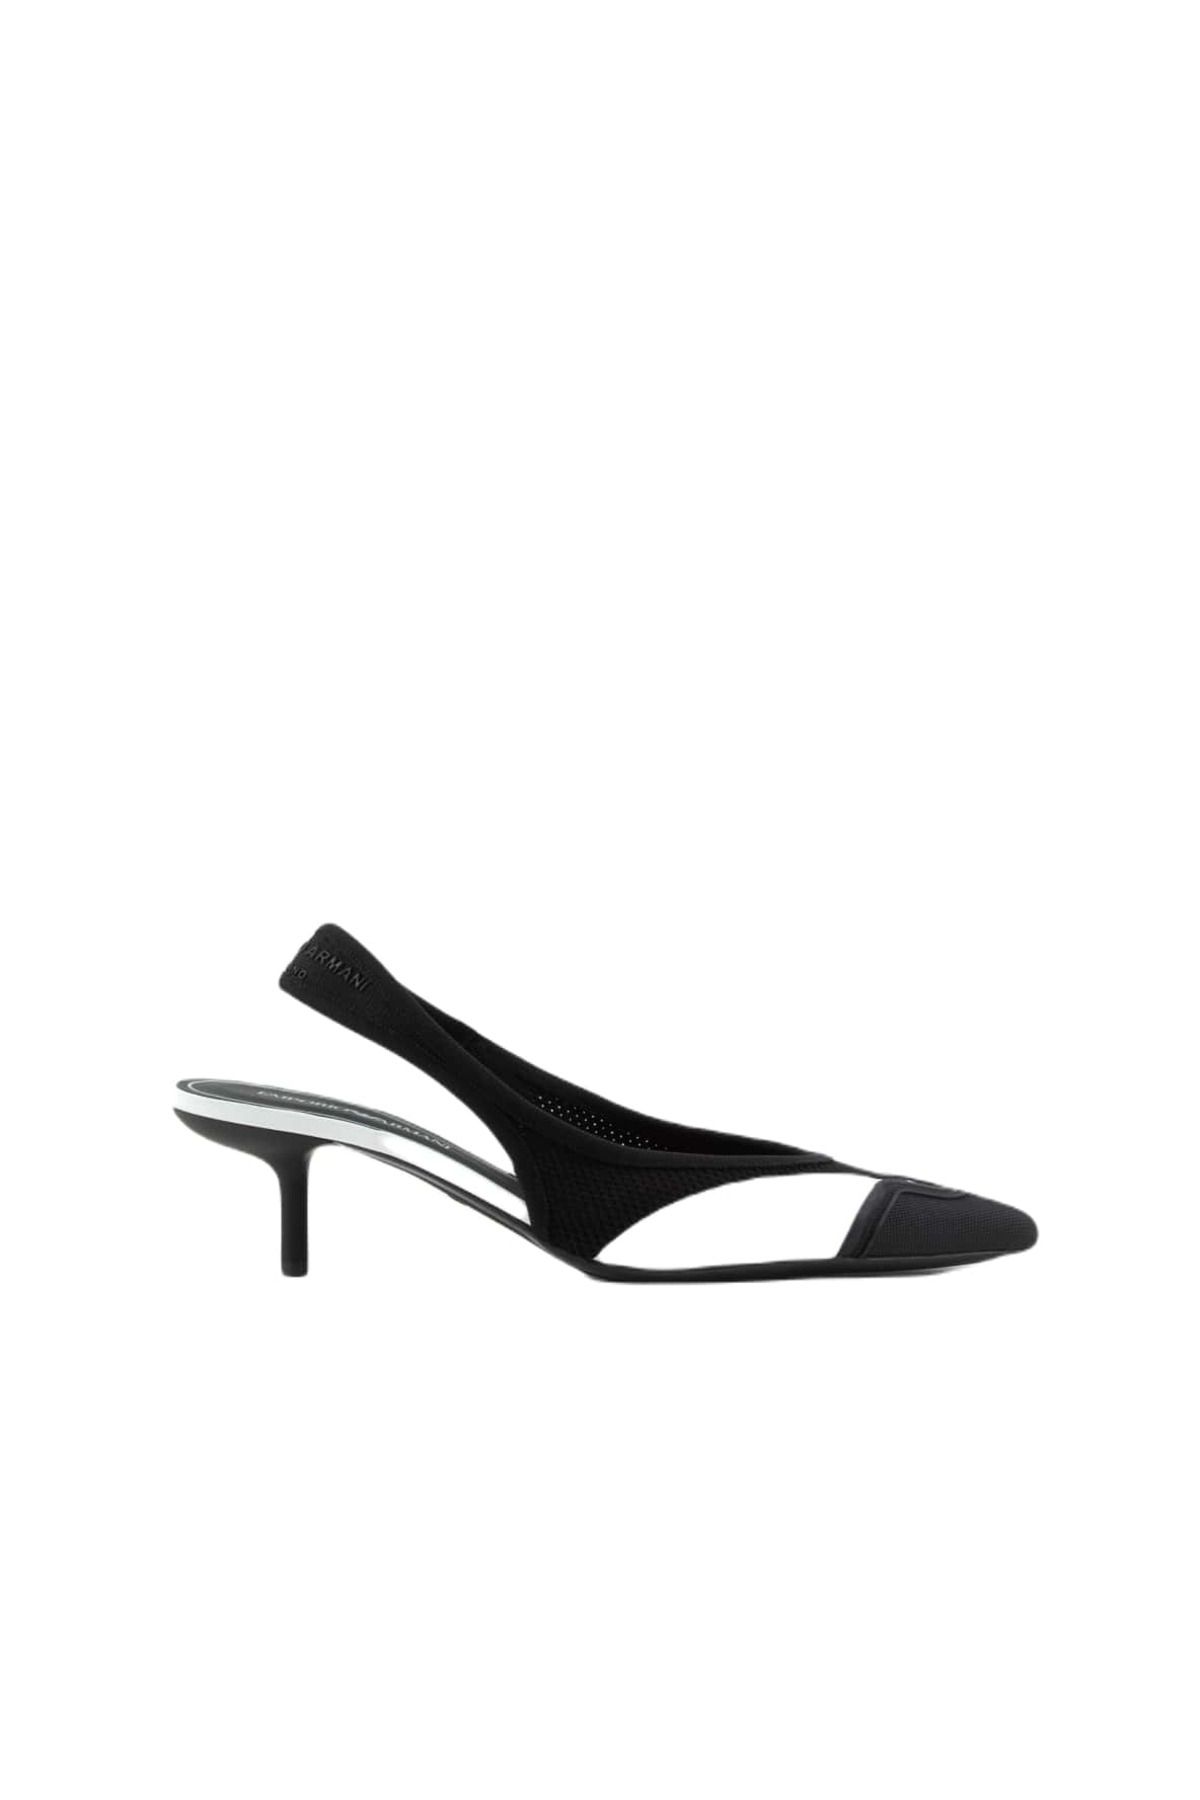 Emporio Armani Kadın Yüksek Topuklu Rahat Logolu Siyah Klasik Topuklu Ayakkabı X3E453 XD379-00500